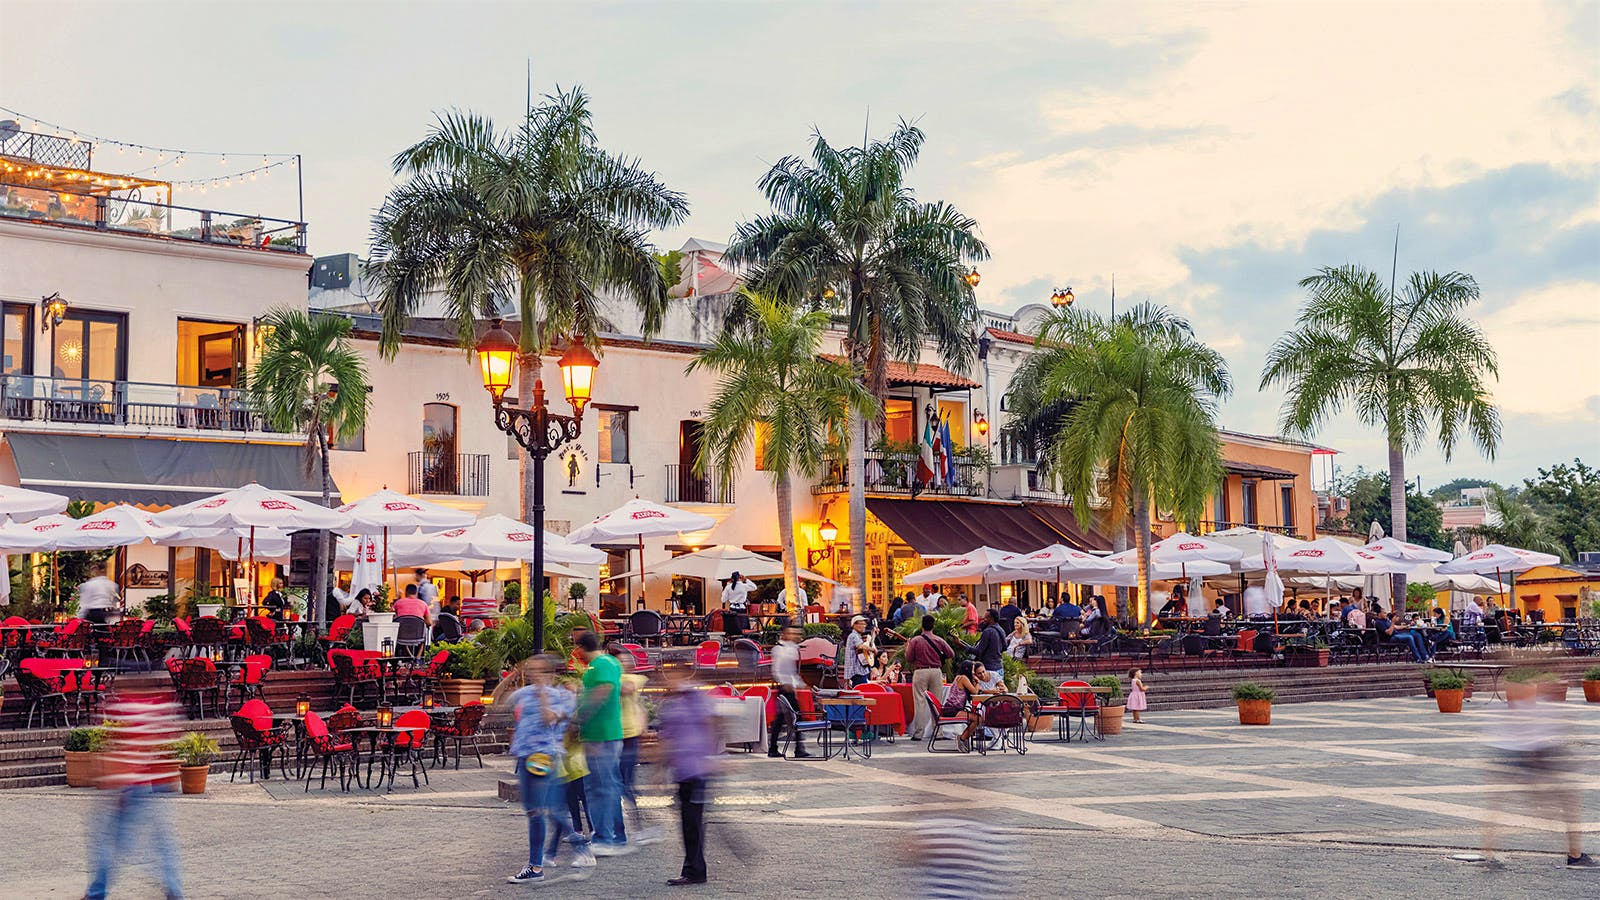 The Plaza de España showcases the beauty and energy of Santo Domingo, the capital of the Dominican Republic.